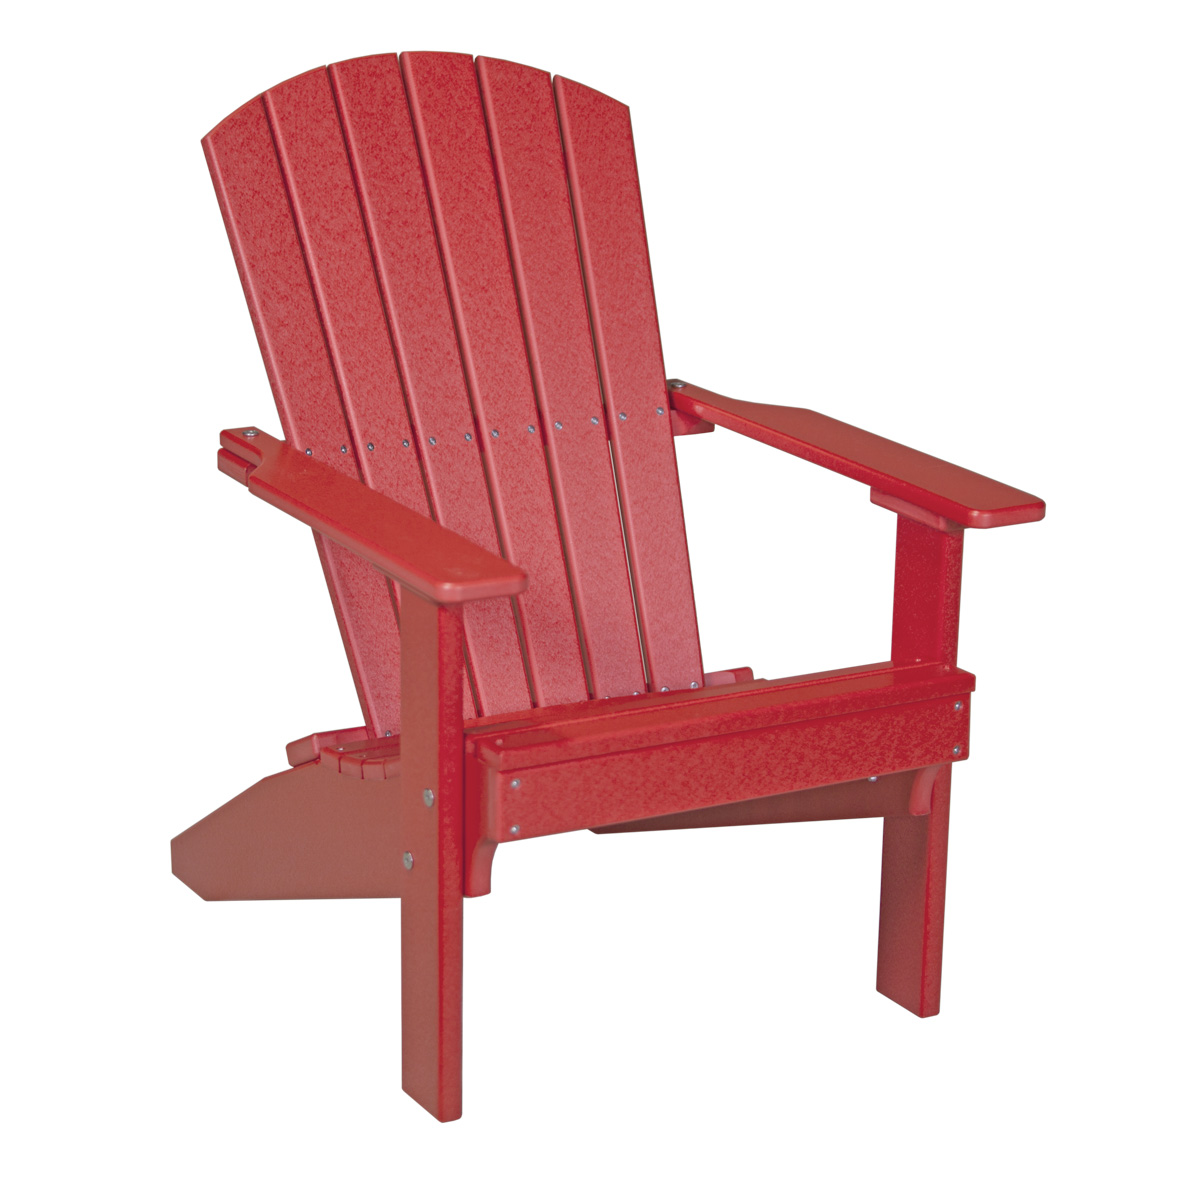 lakeside Adirondack chair